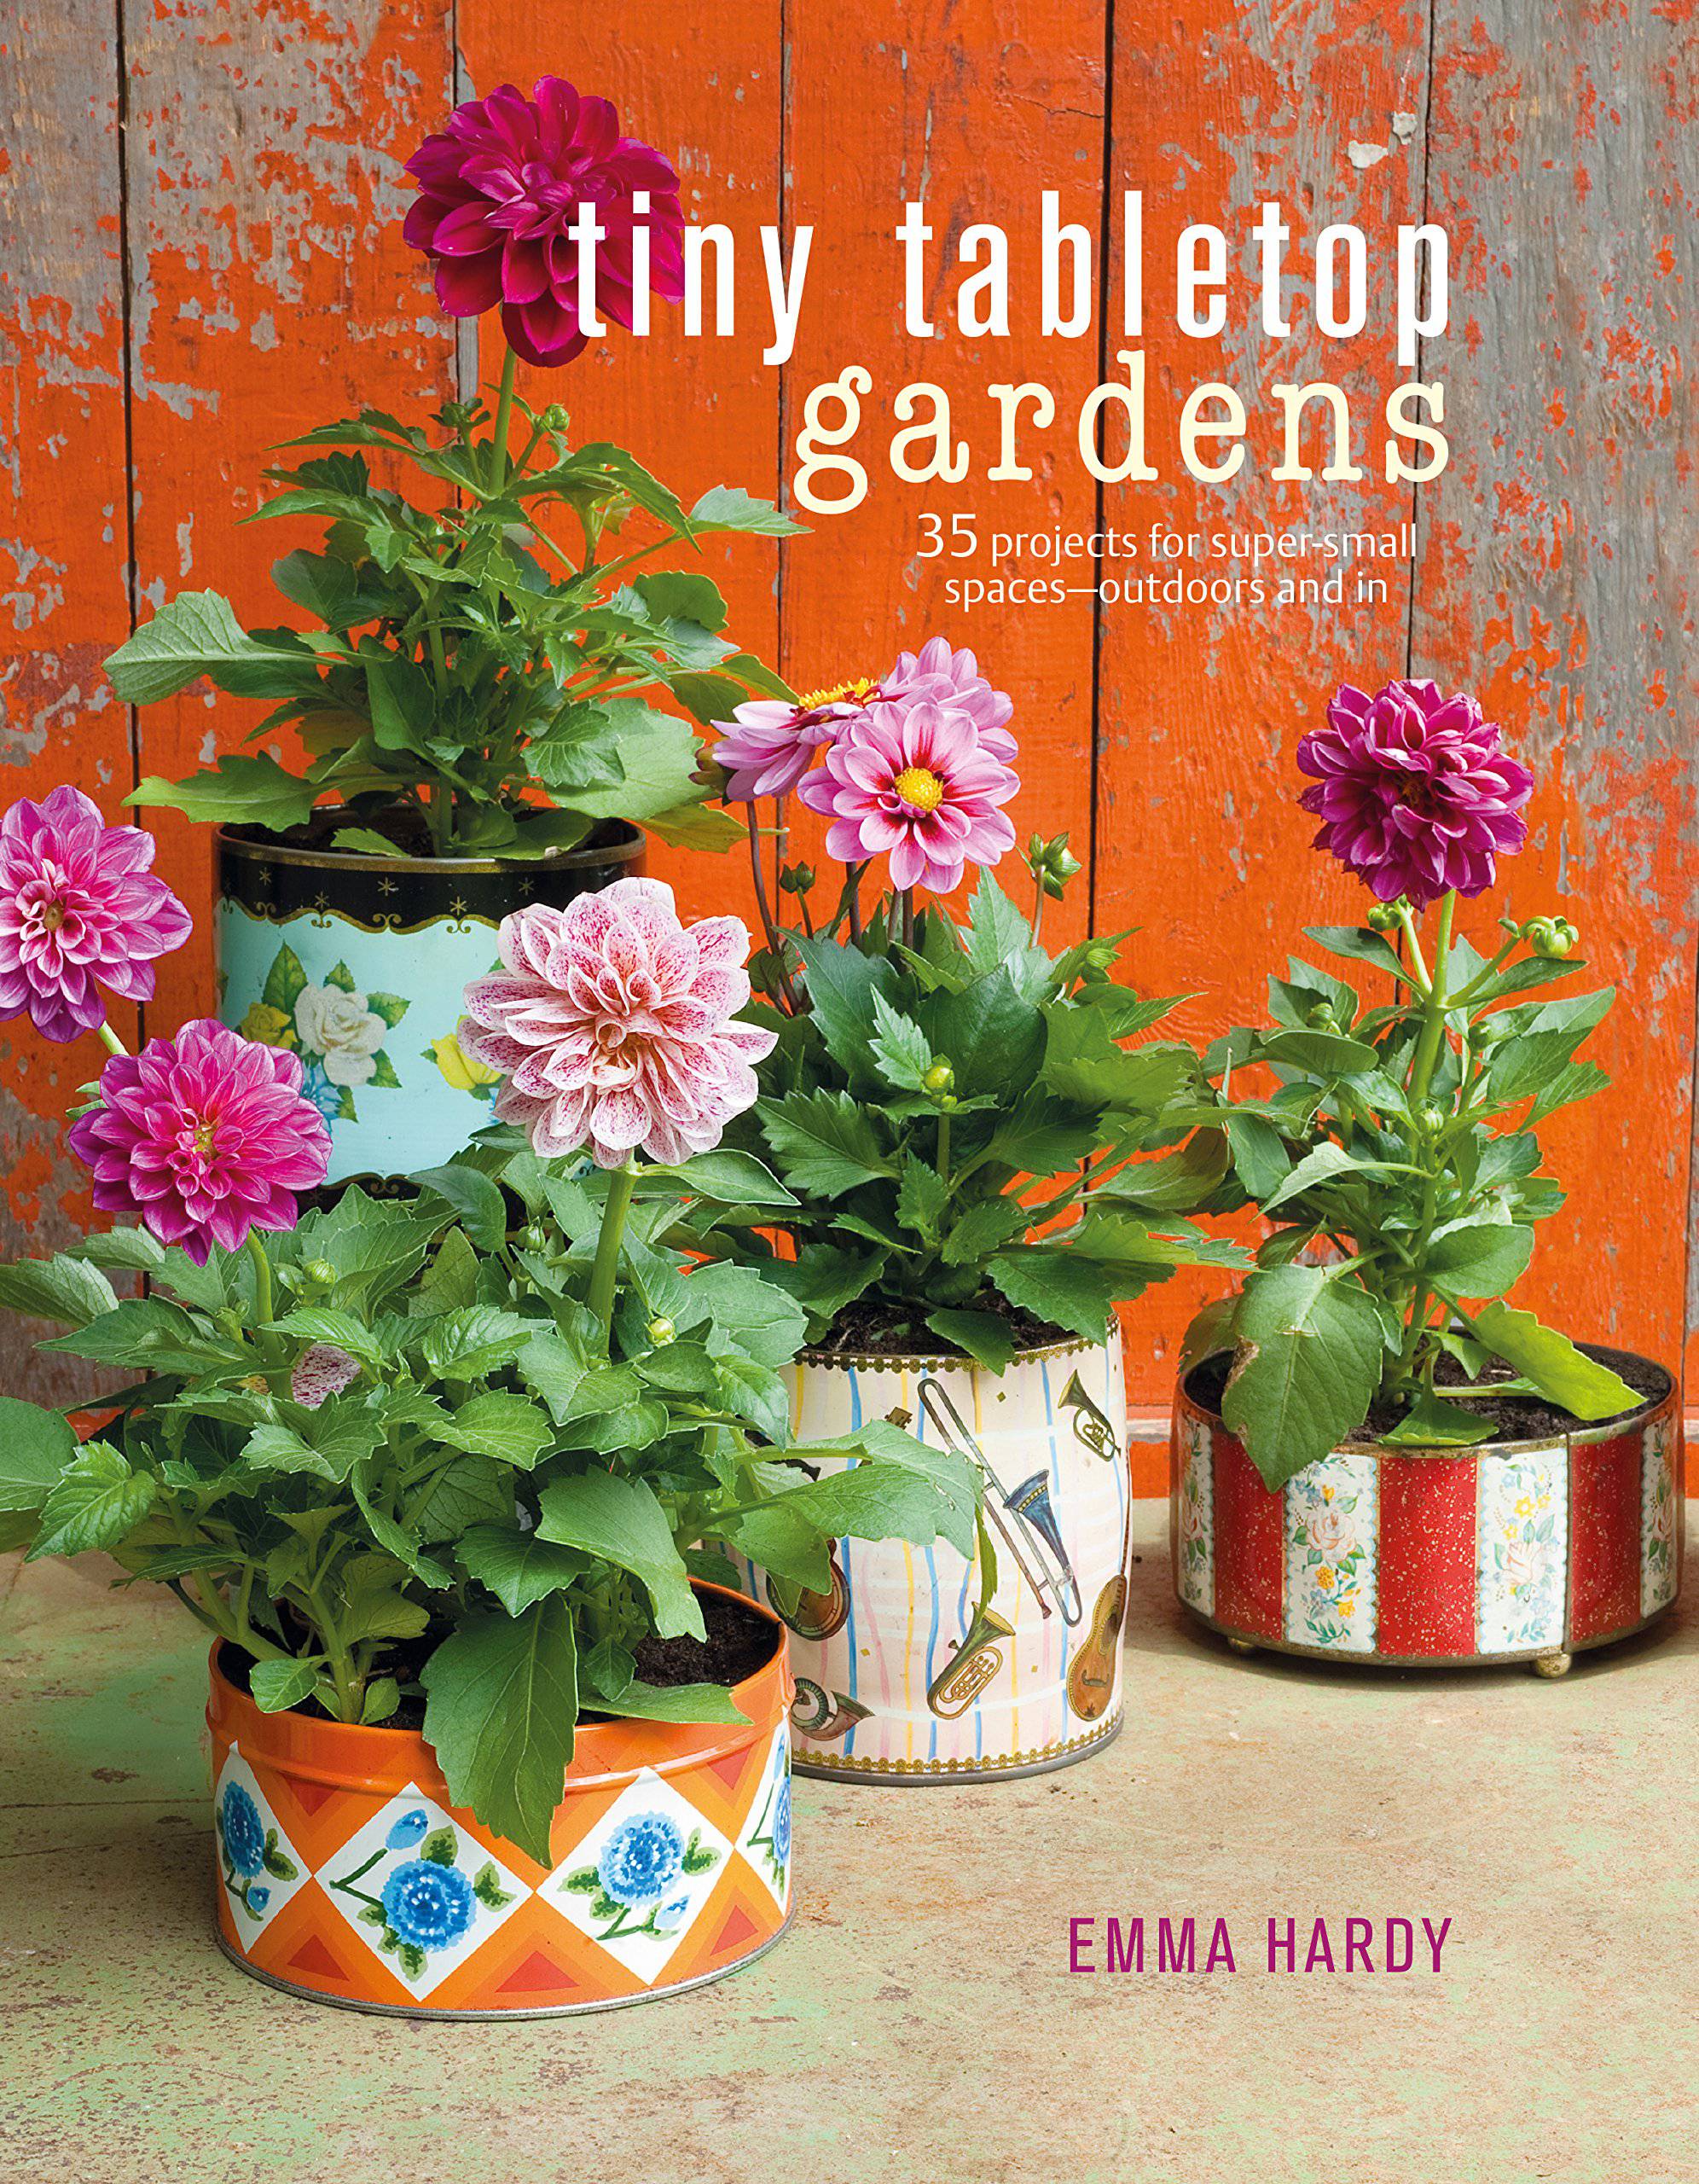 Tiny tabletop gardens by Emma Hardy